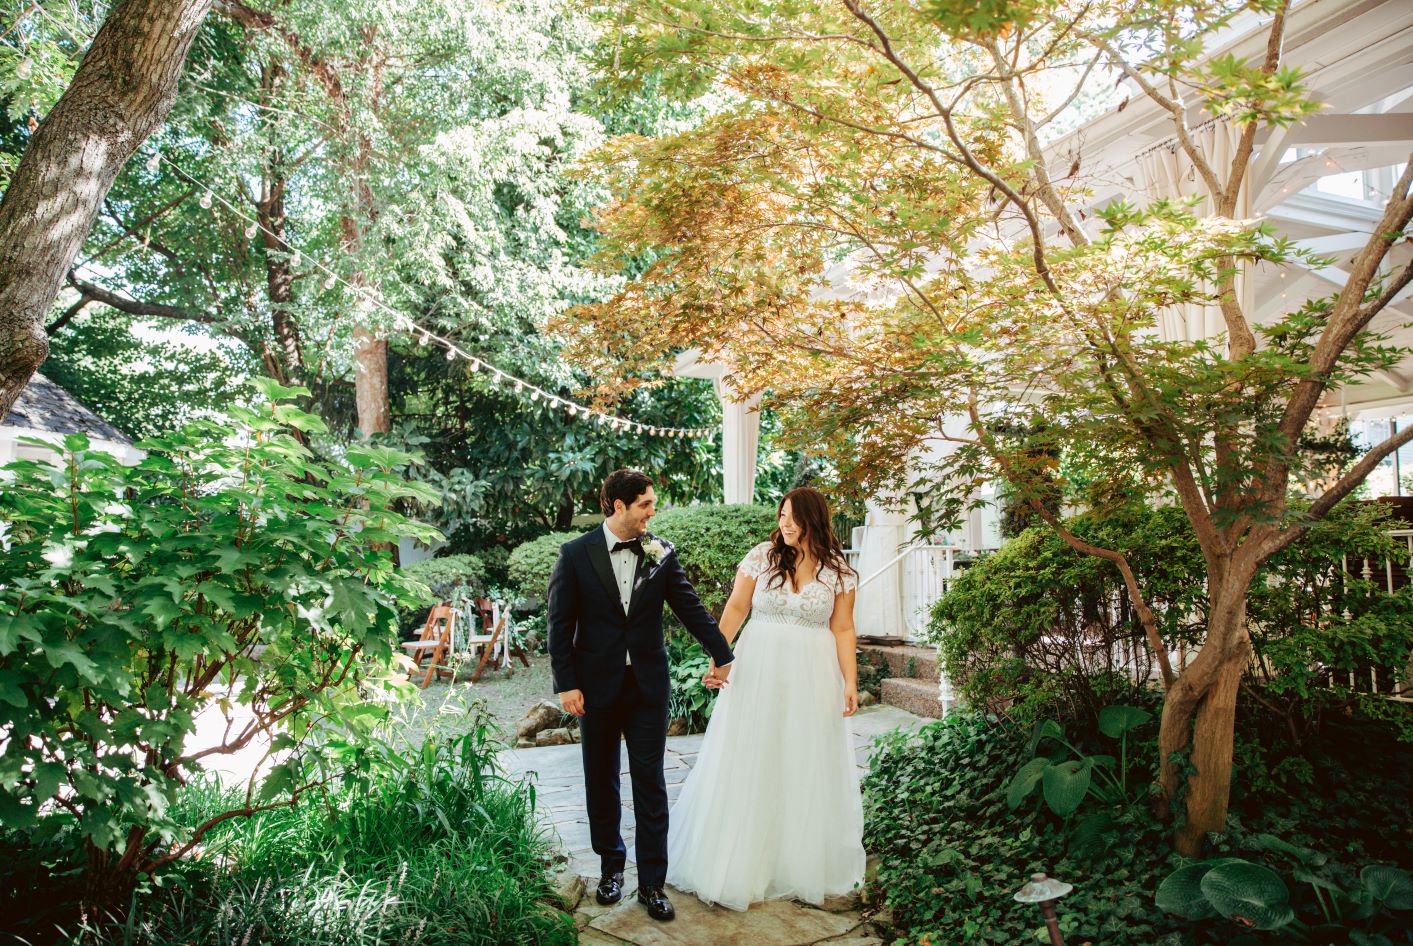 Bride and groom walking hand in hand through enchanted garden at their earthy summer garden wedding in September